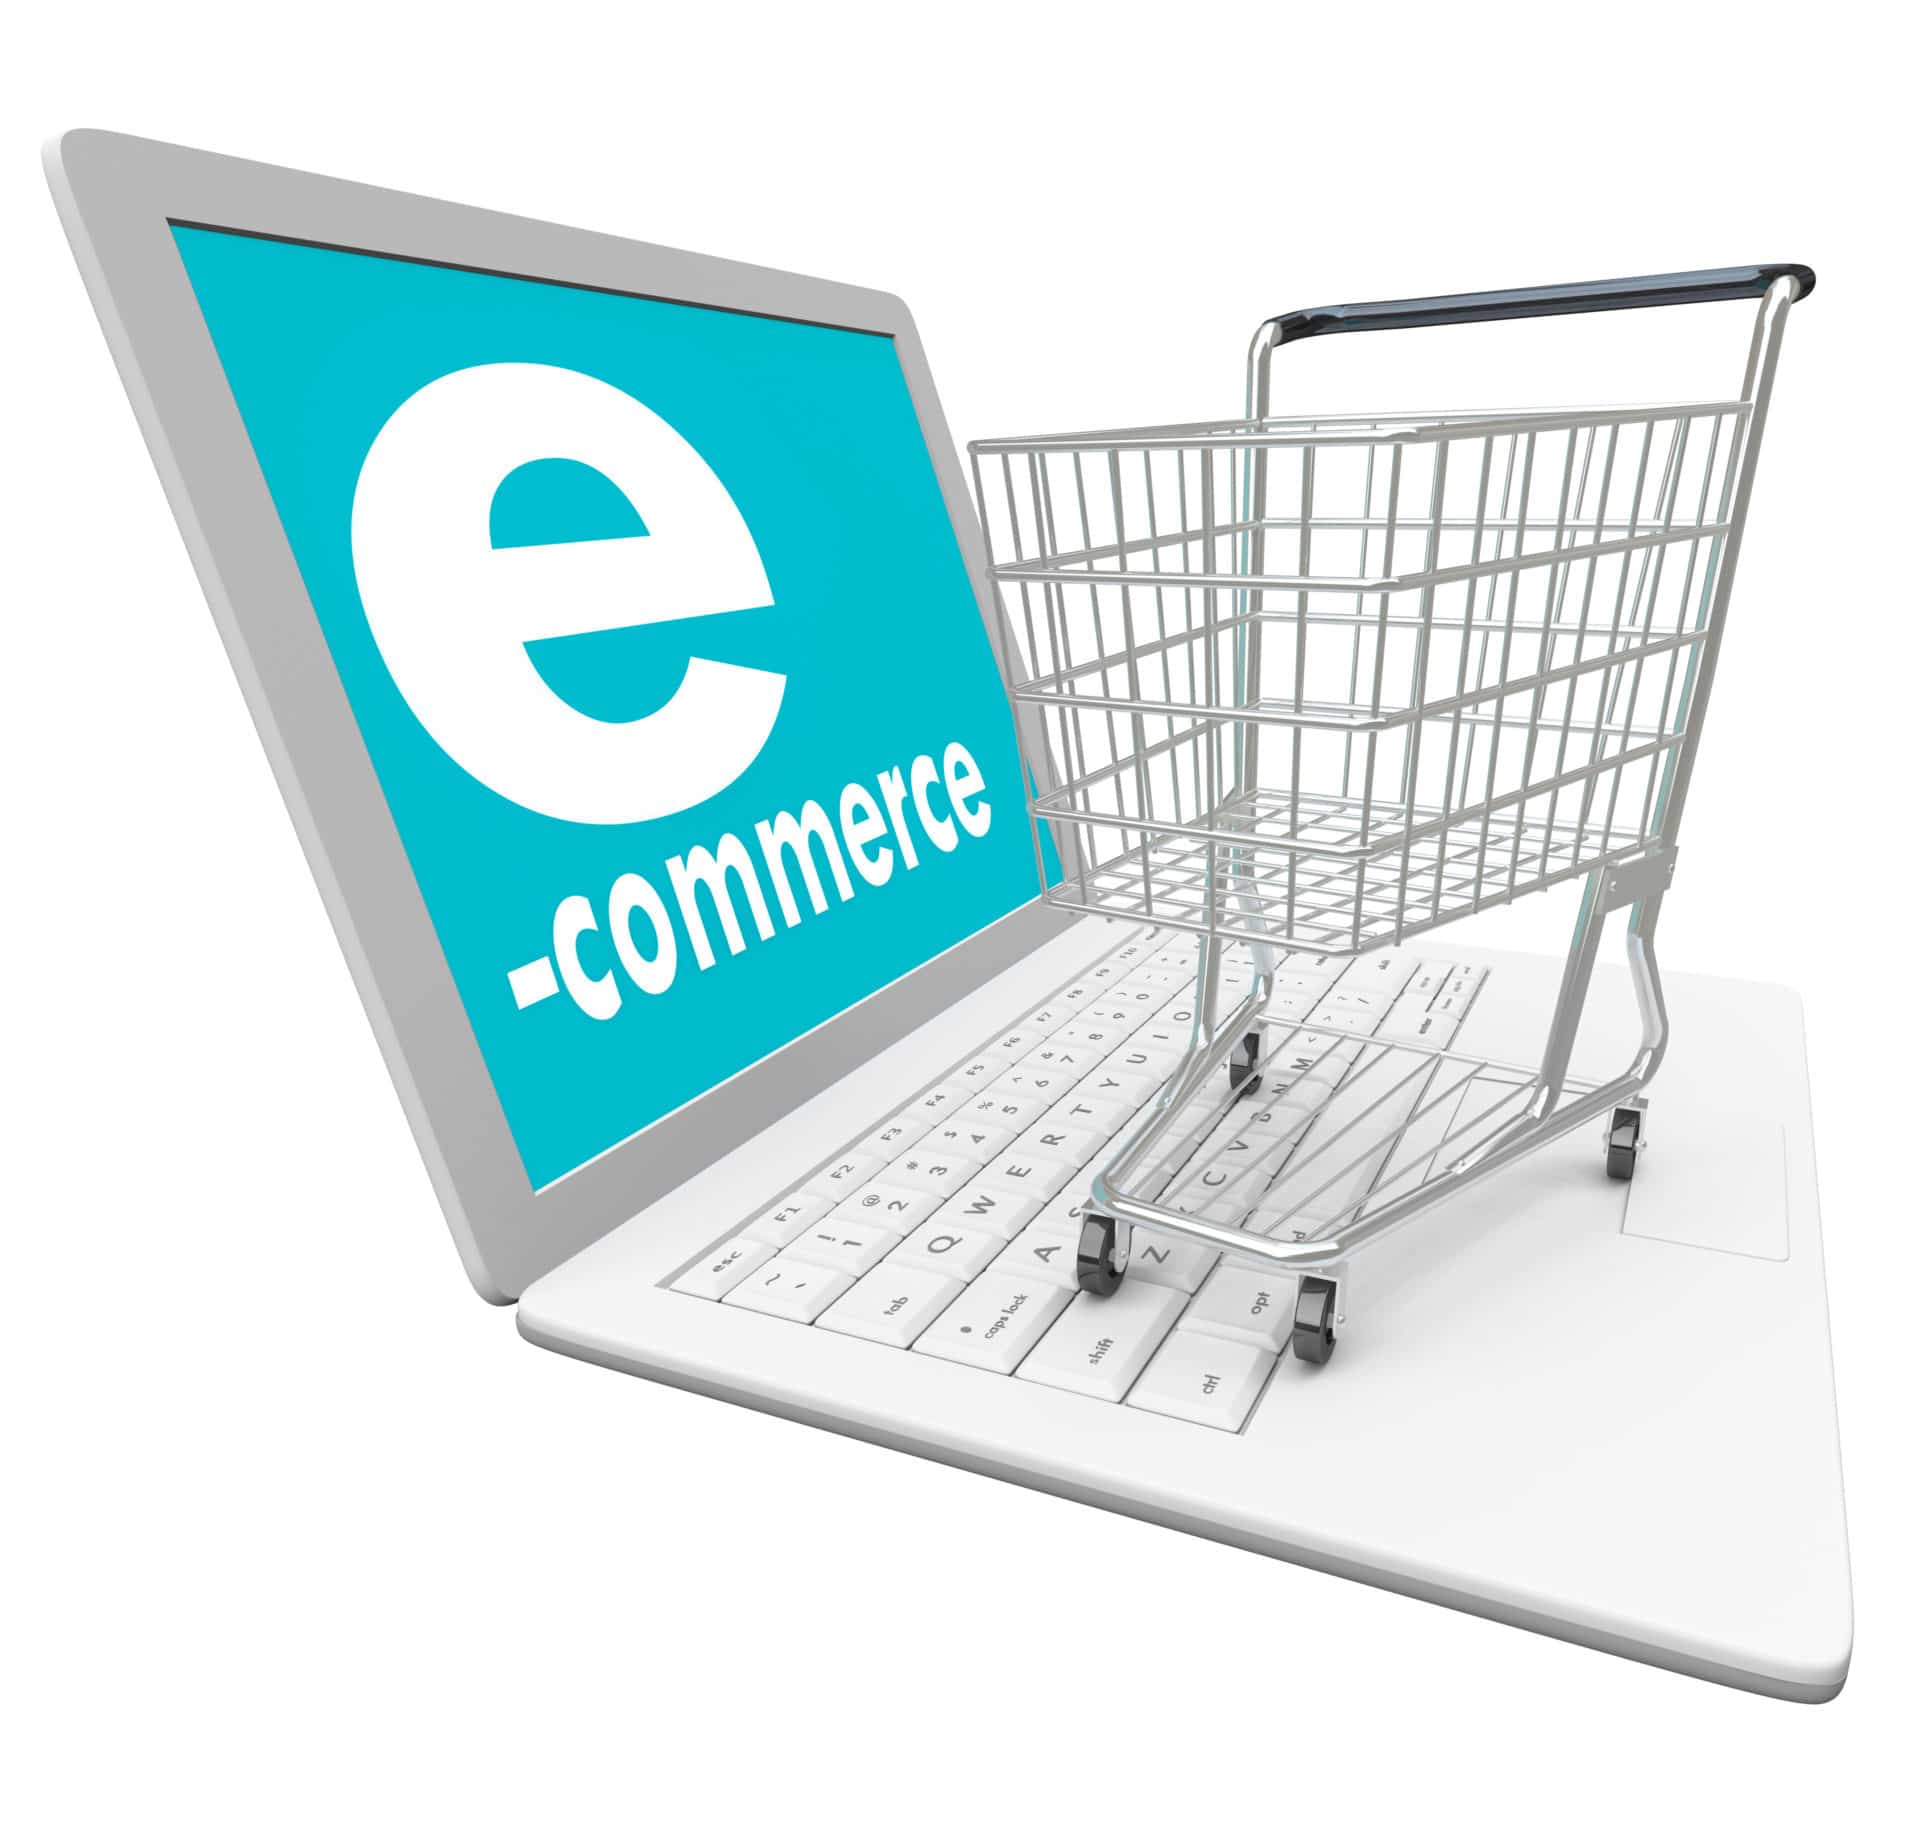 plateforme e-commerce